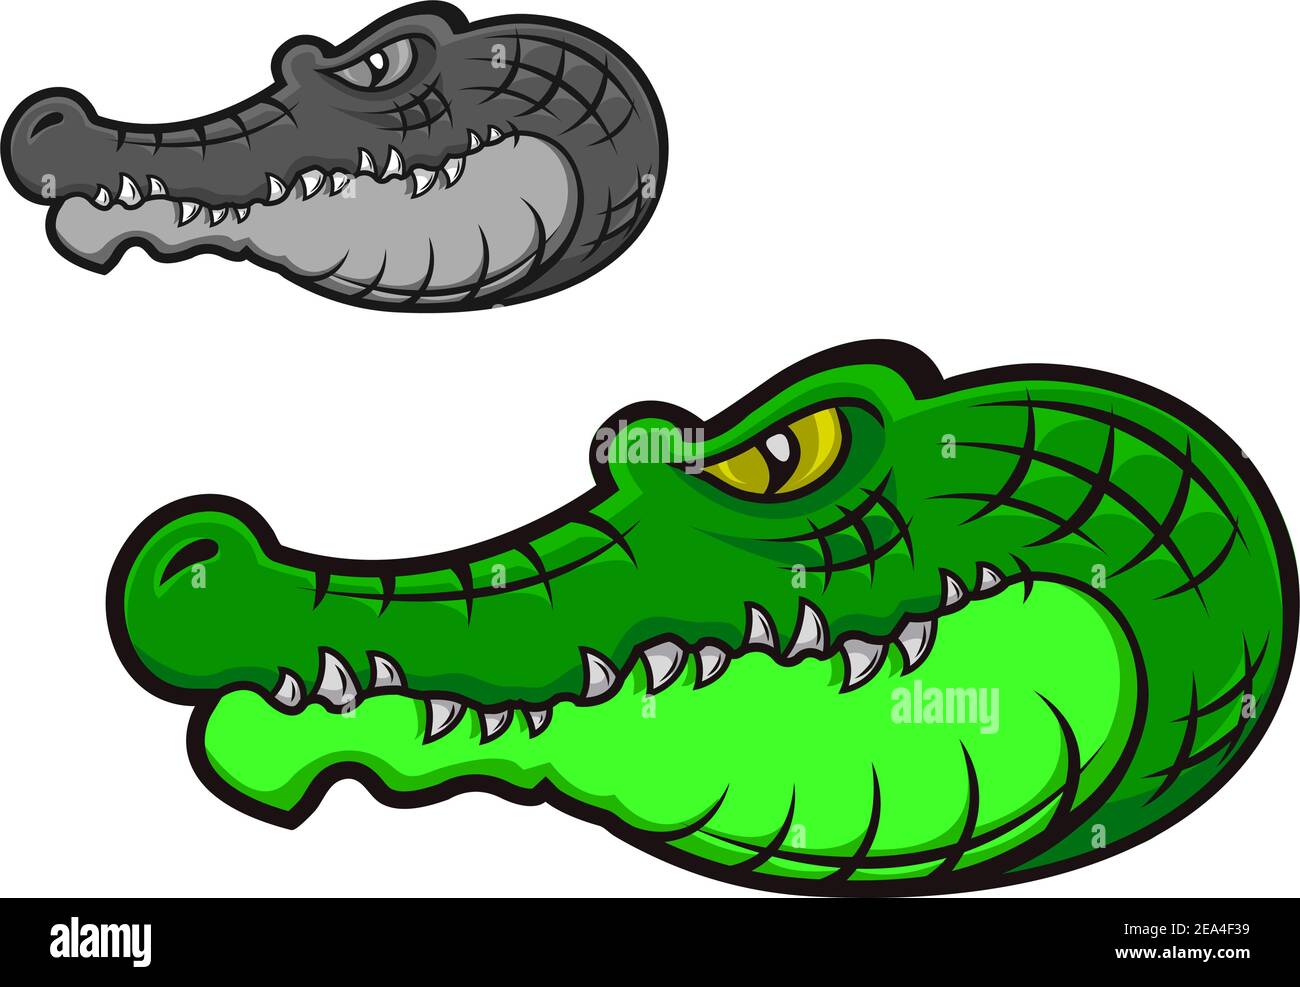 Green cartoon crocodile head for tattoo or mascot design Stock Vector